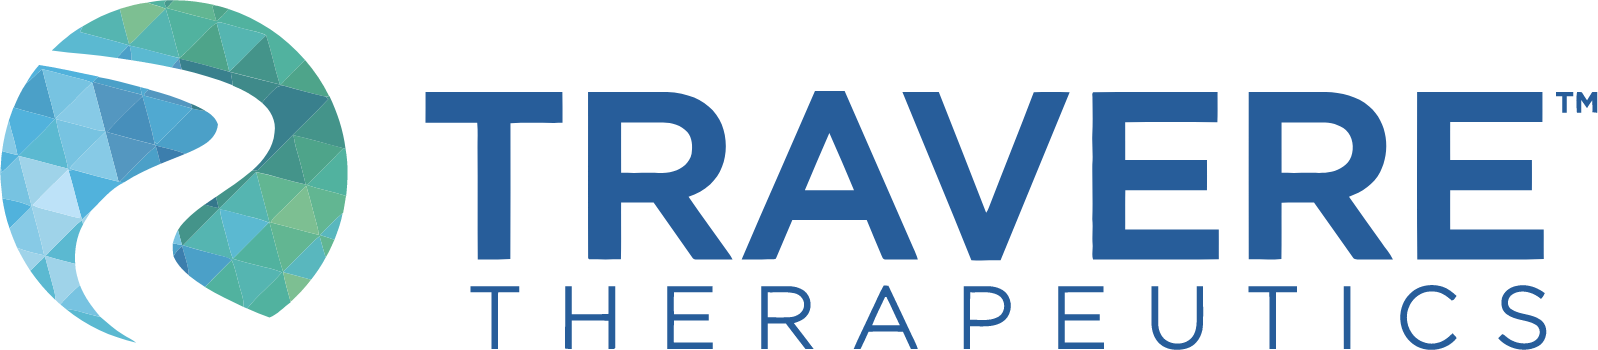 Travere Therapeutics logo large (transparent PNG)